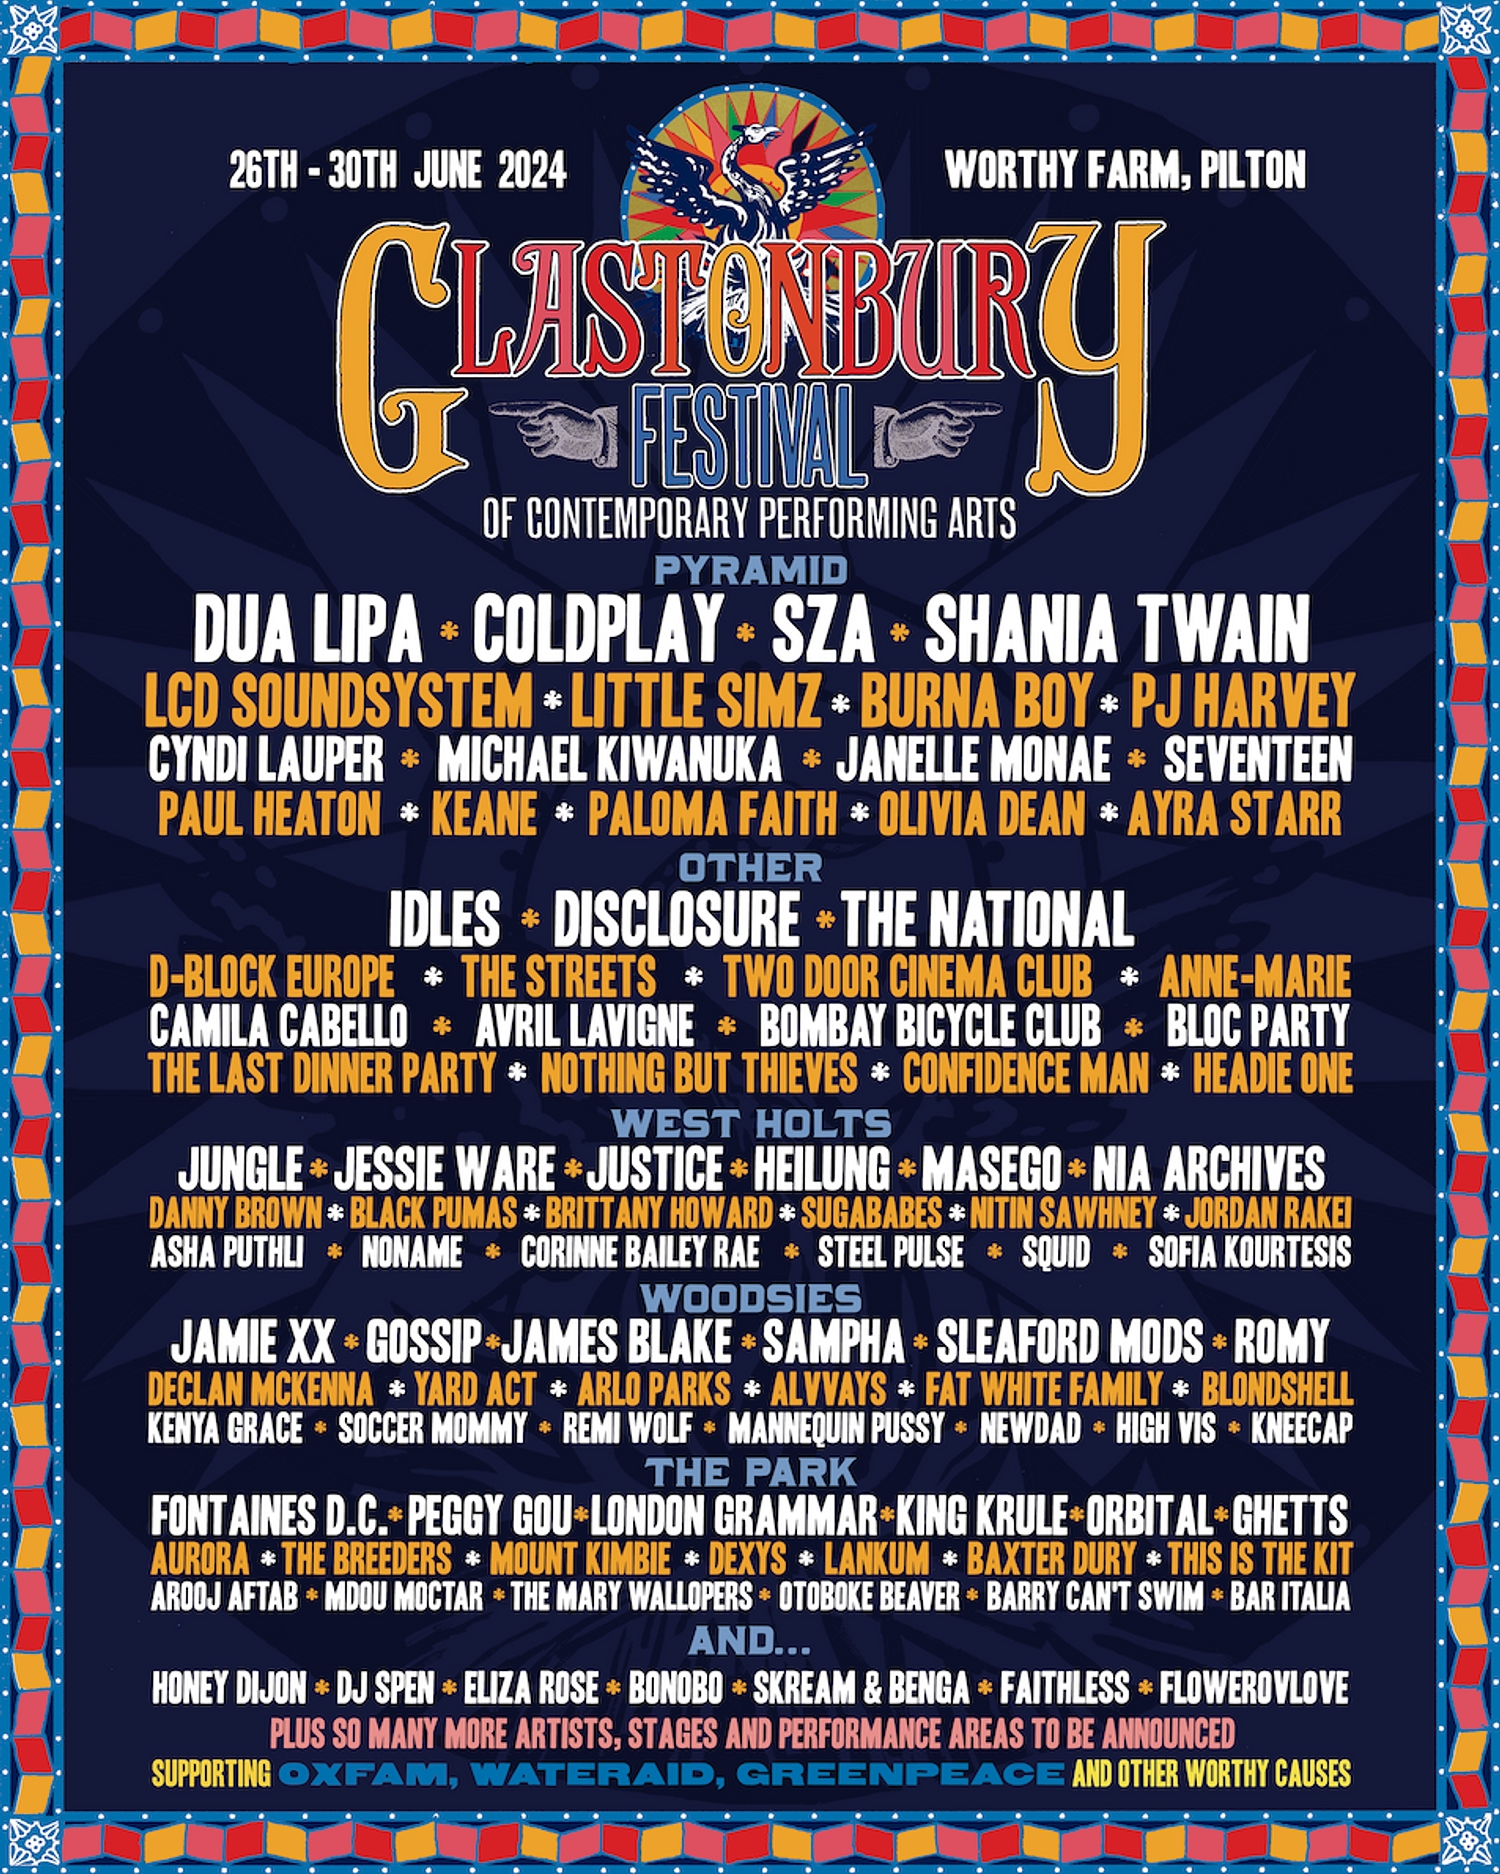 Glastonbury Festival confirm Dua Lipa, Coldplay, and SZA as 2024 headliners